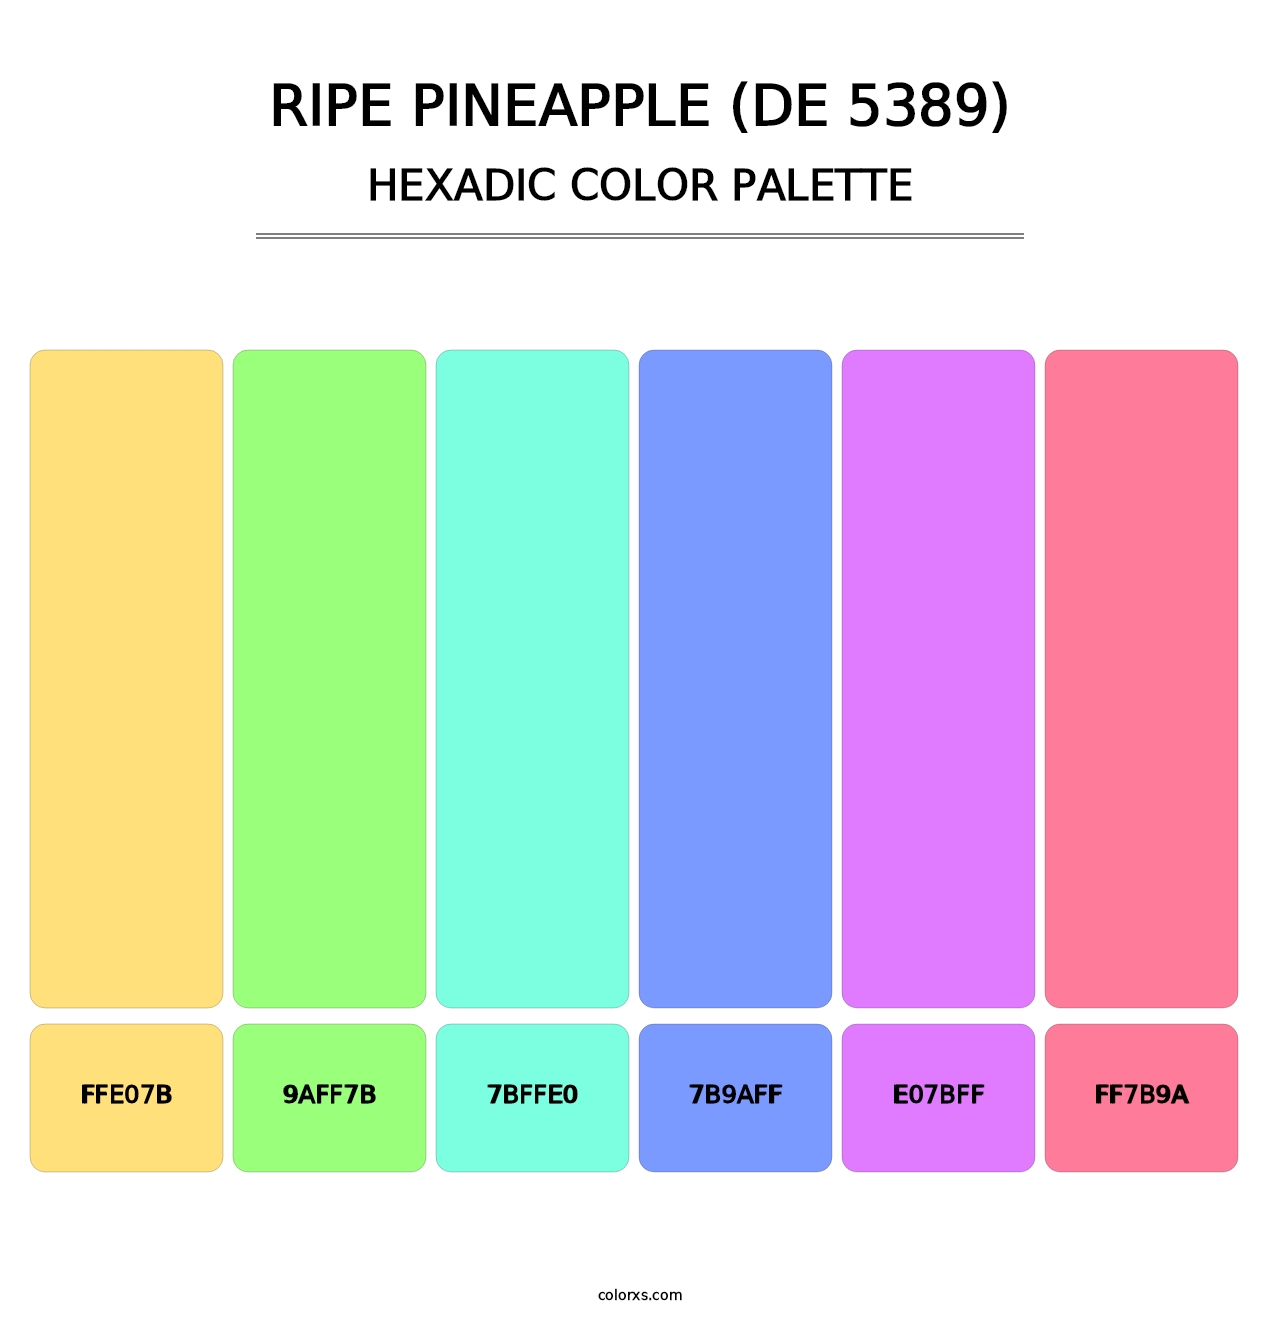 Ripe Pineapple (DE 5389) - Hexadic Color Palette